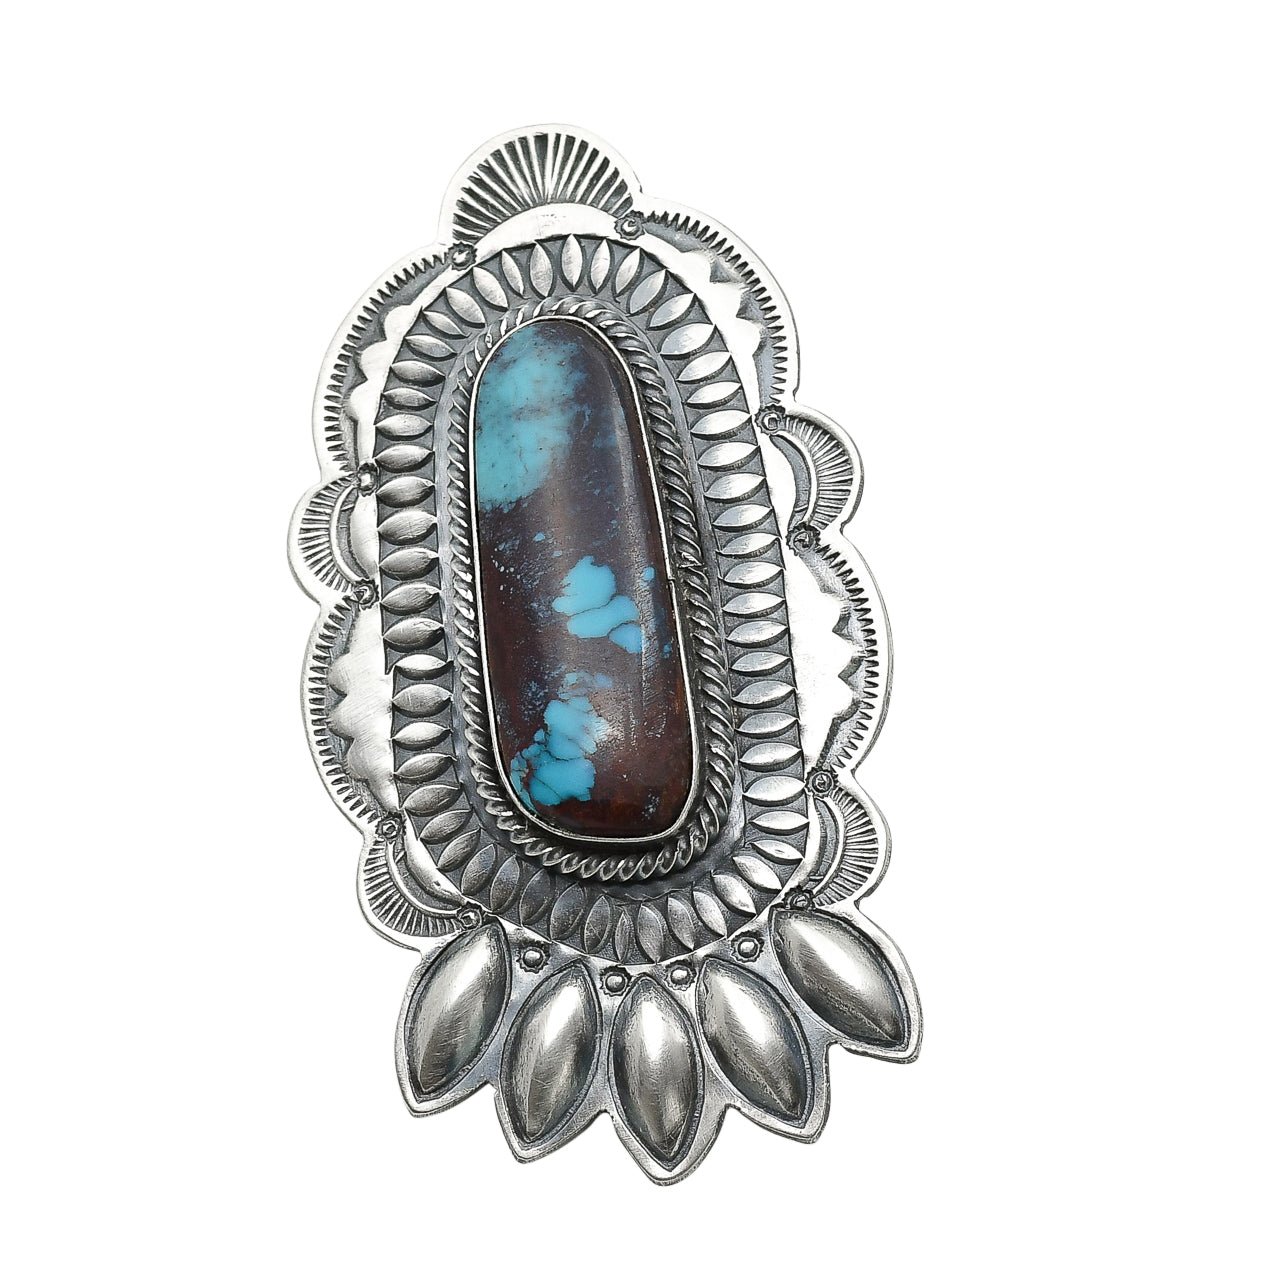 Vintage Bisbee Pin Pendant by Navajo Jeweler Paul Begay - Turquoise & Tufa